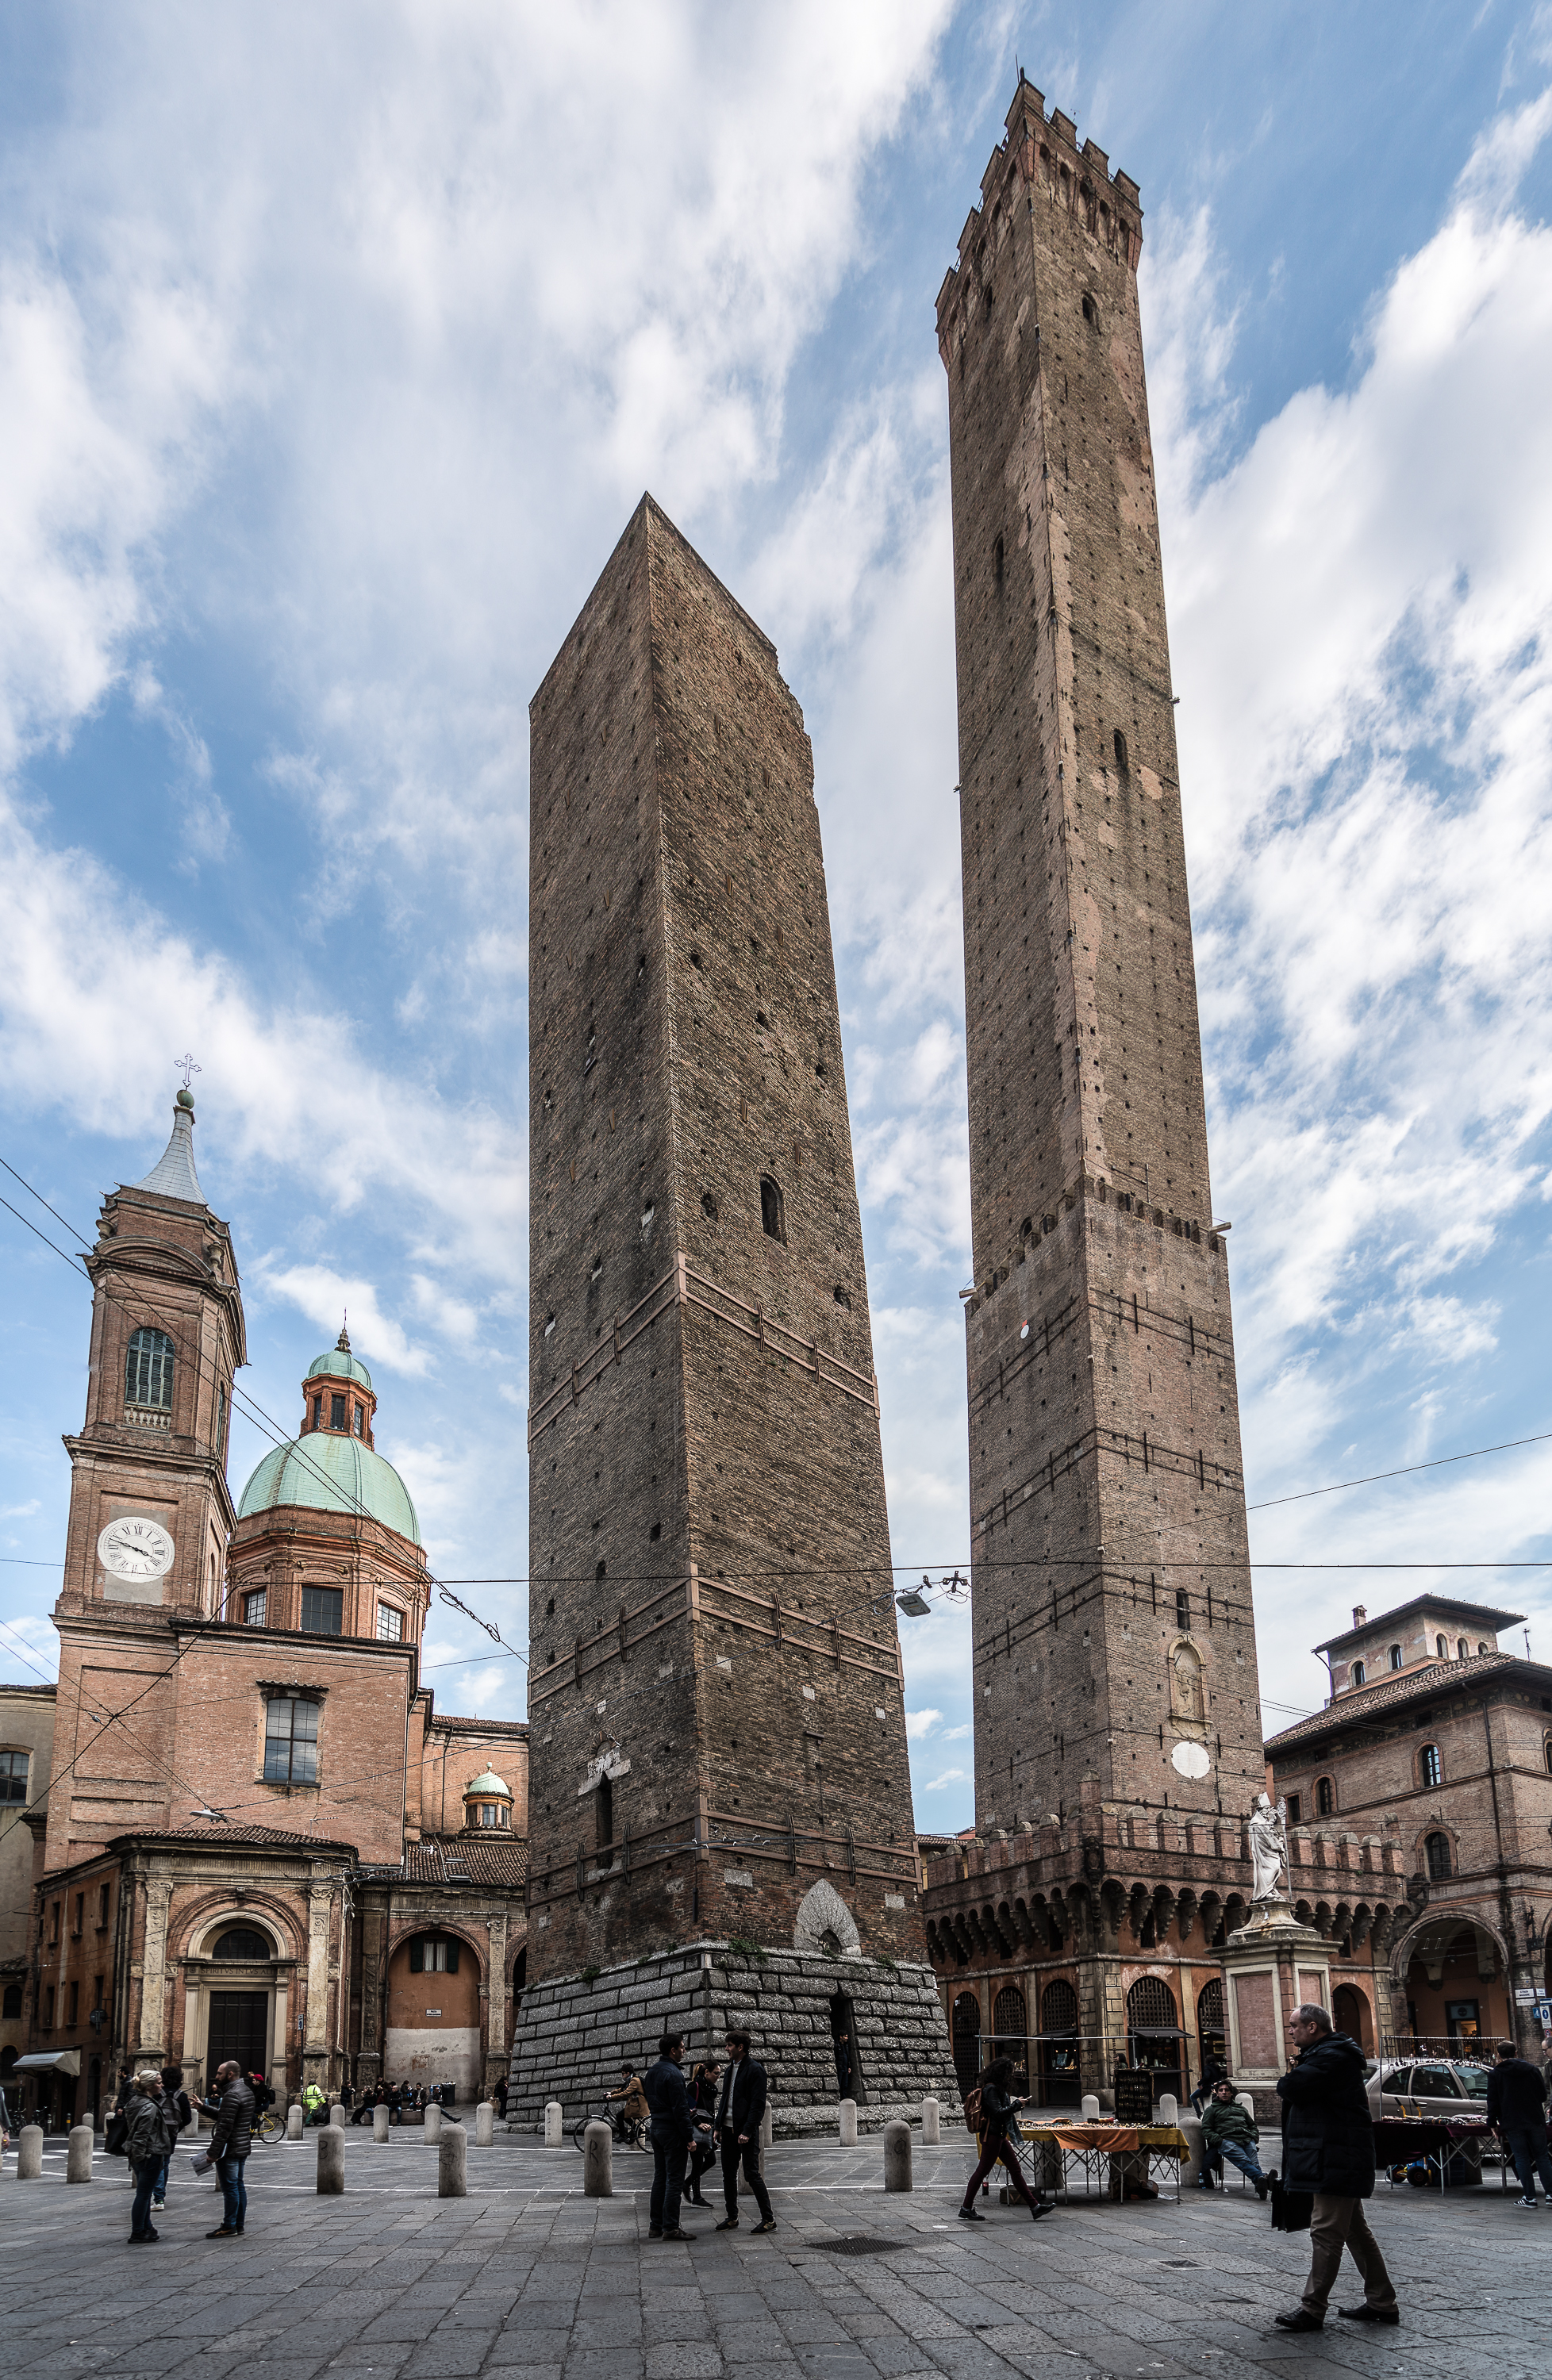 photo: https://upload.wikimedia.org/wikipedia/commons/a/ab/Due_Torri_-_Bologna.jpg